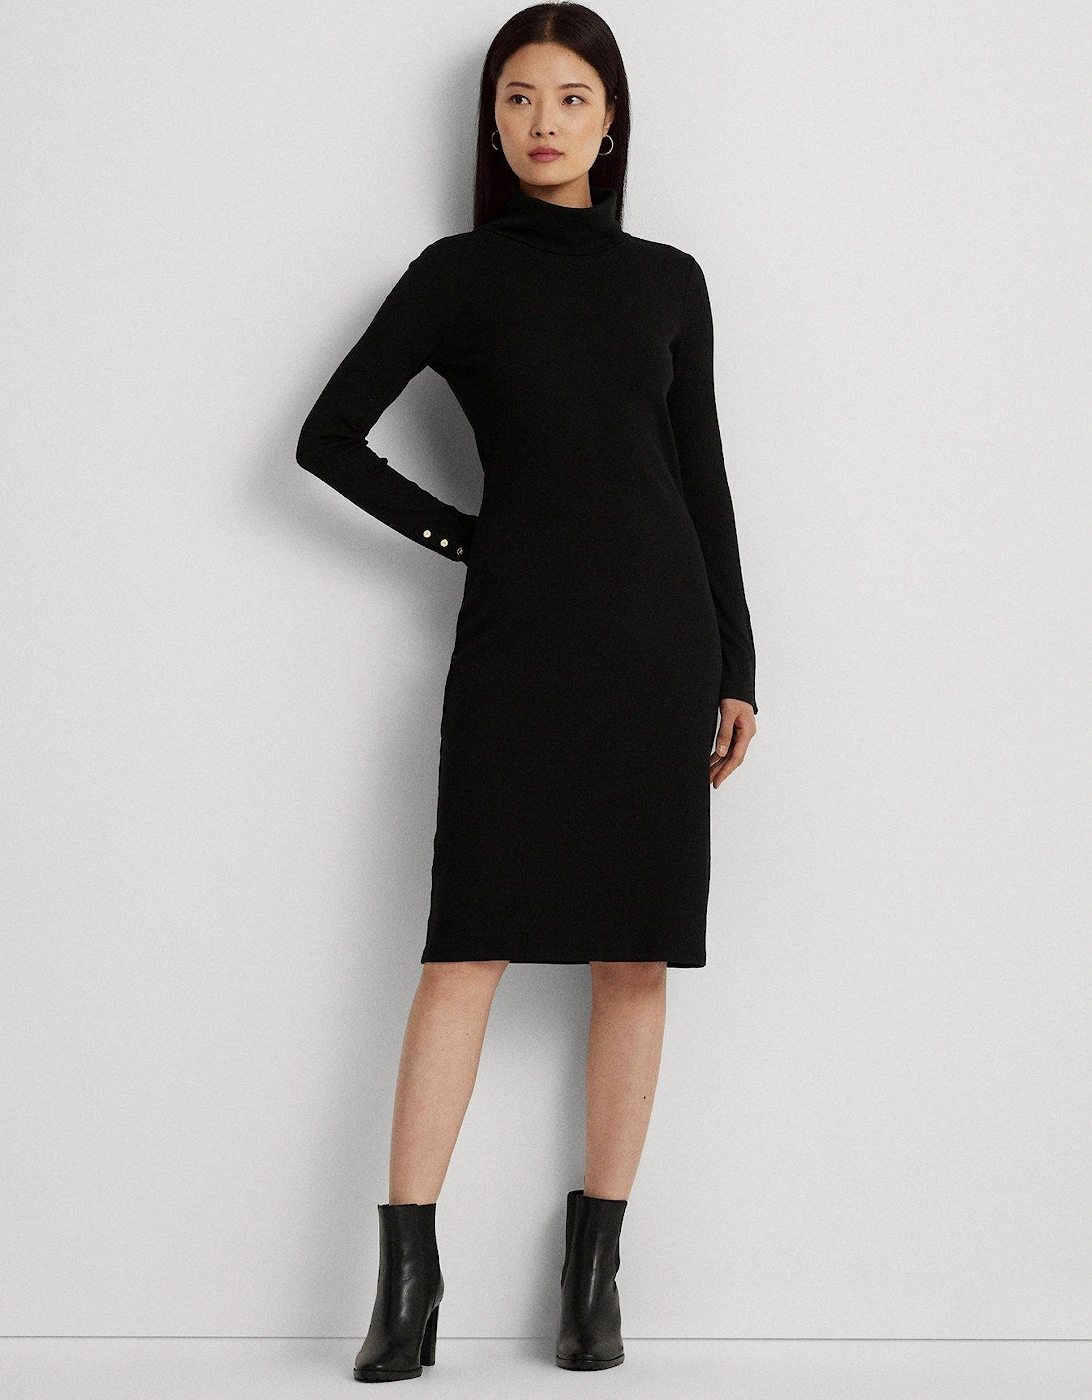 Firlicia-long Sleeve-day Dress - Polo Black